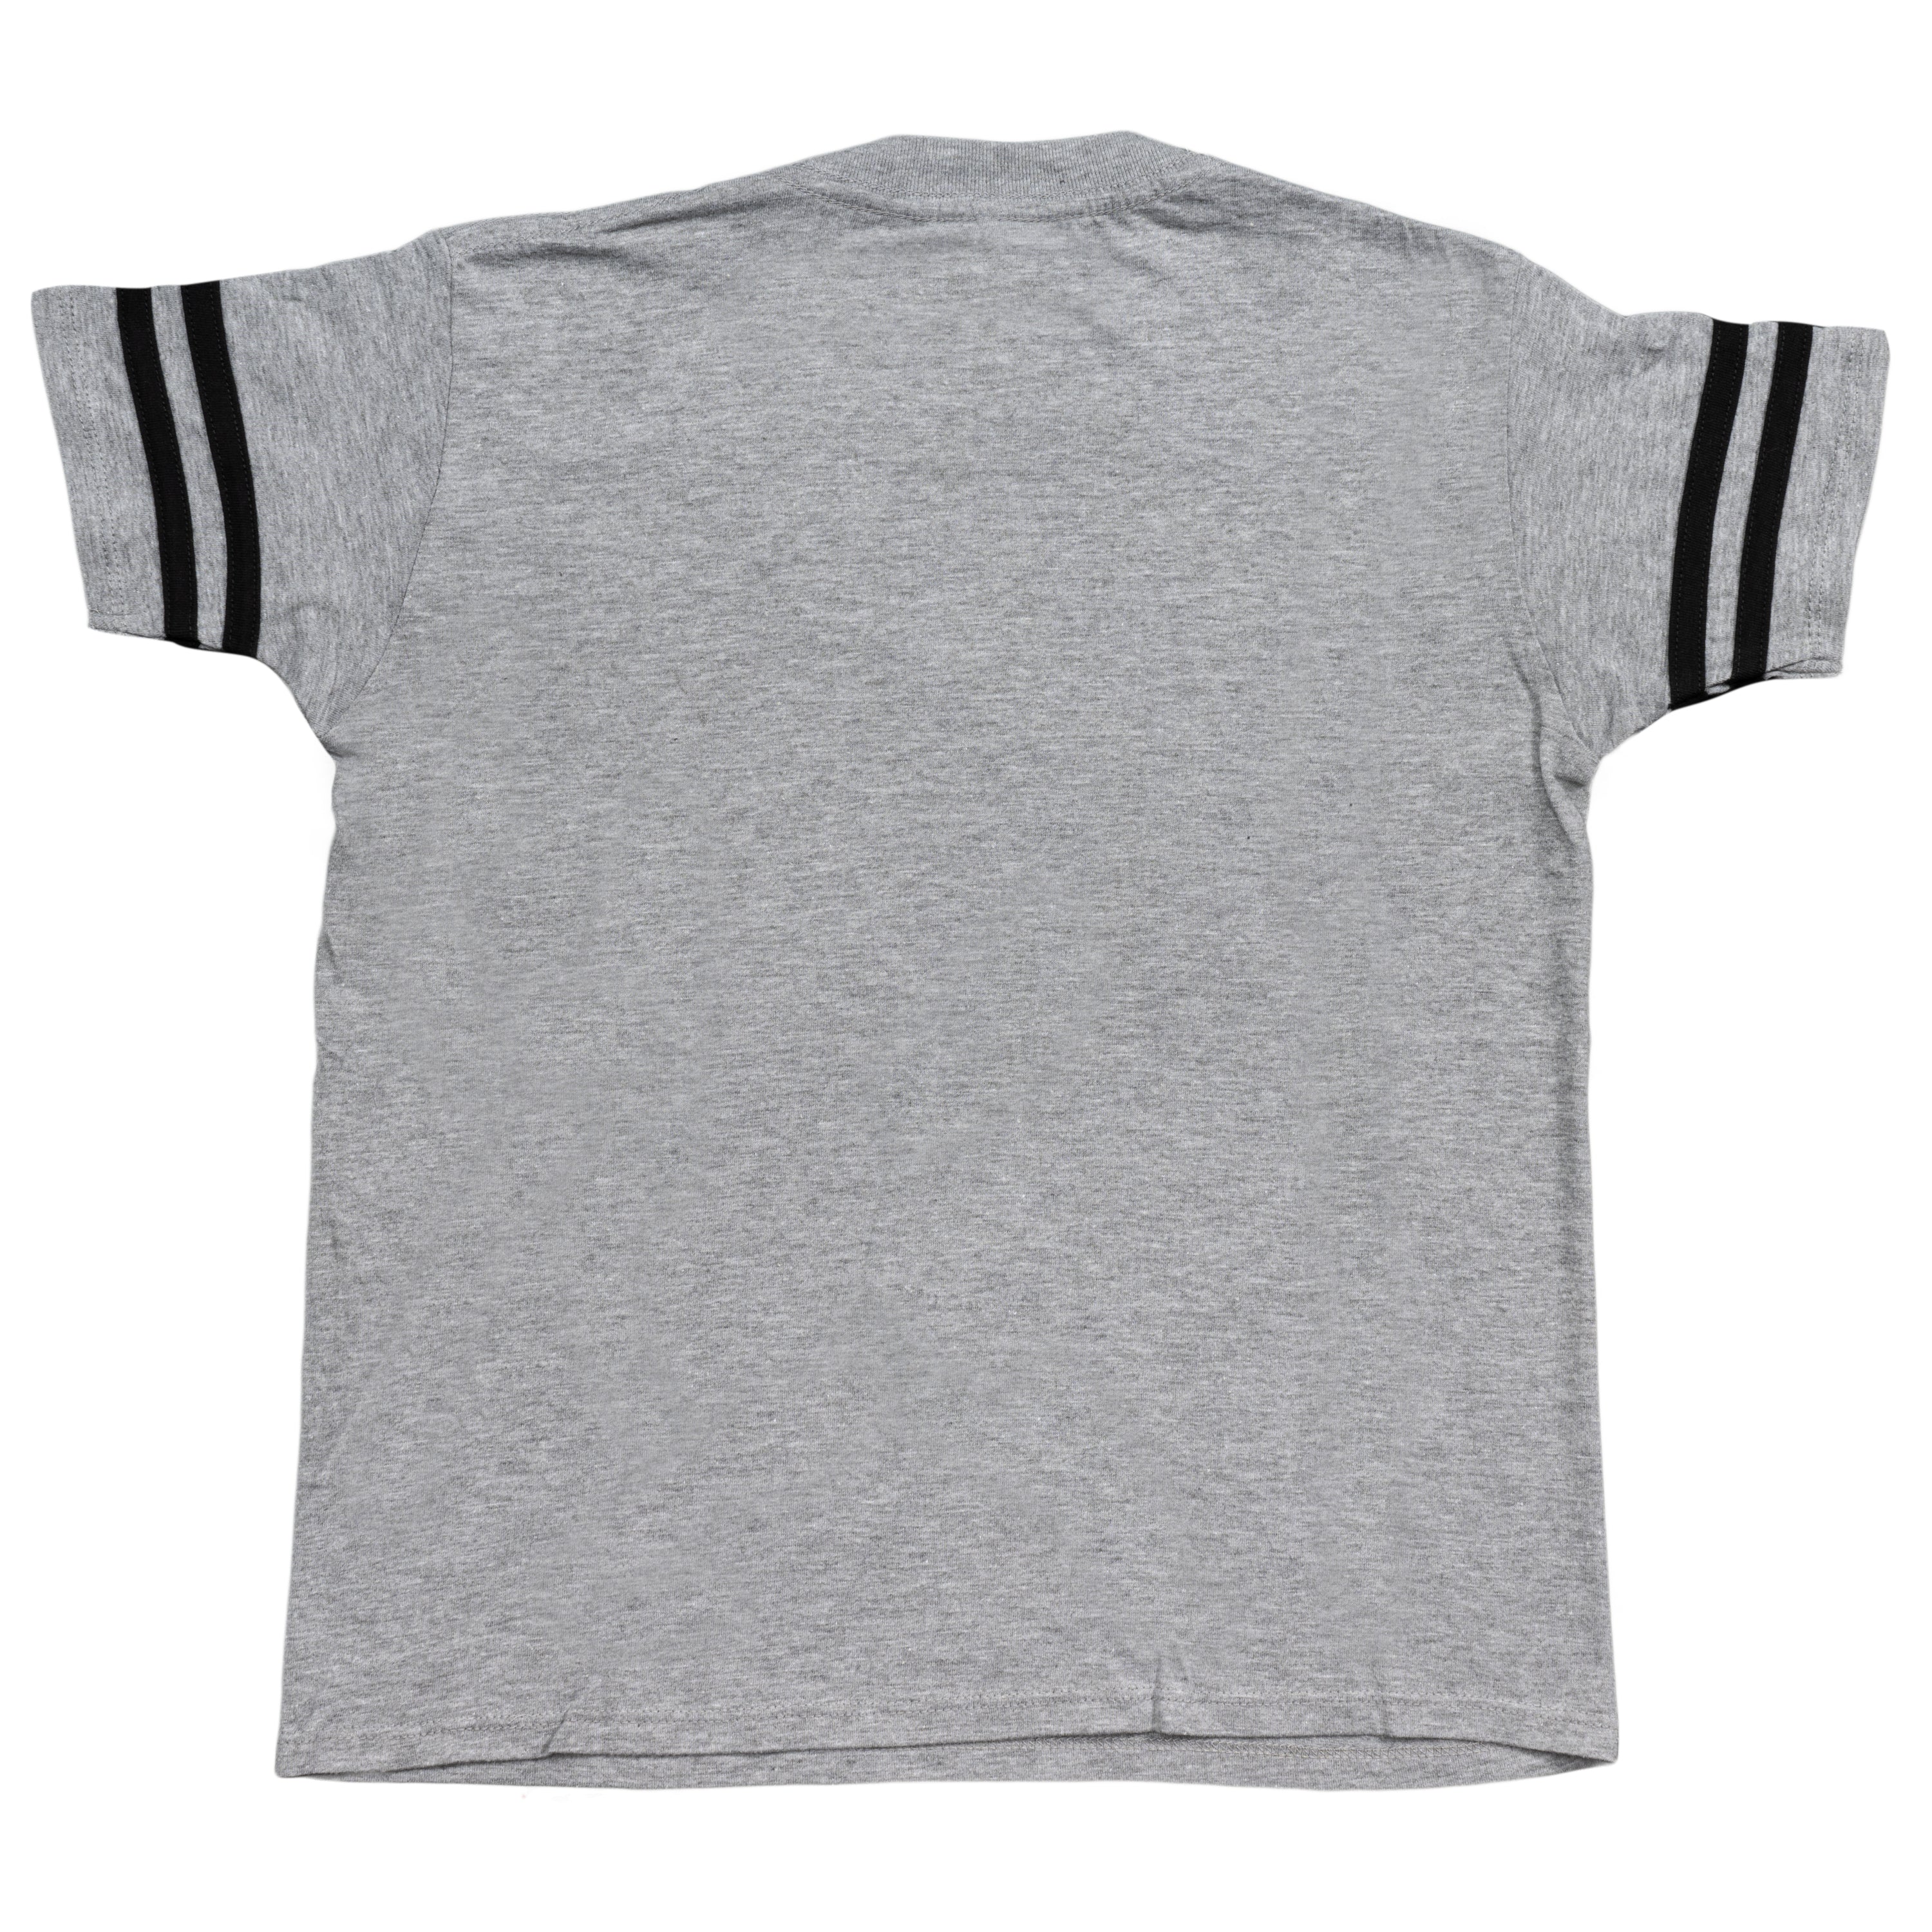 WWE Superstars Striped Sleeve Boys T-Shirt